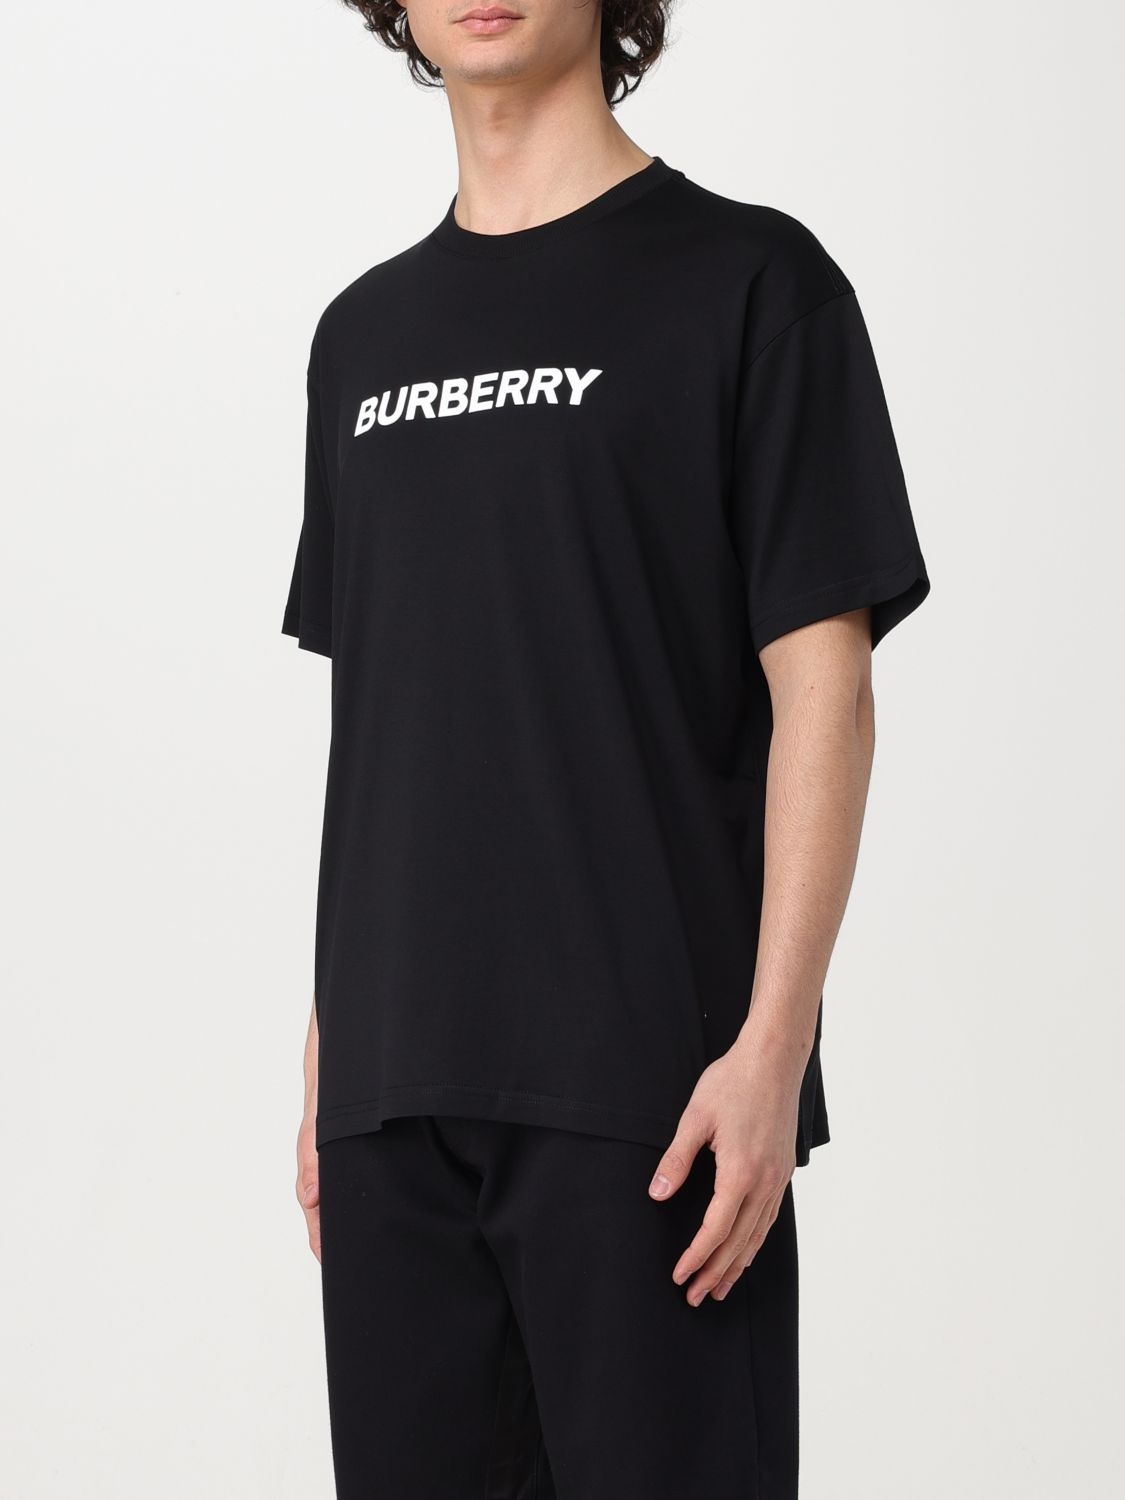 Burberry t-shirt for man - 4